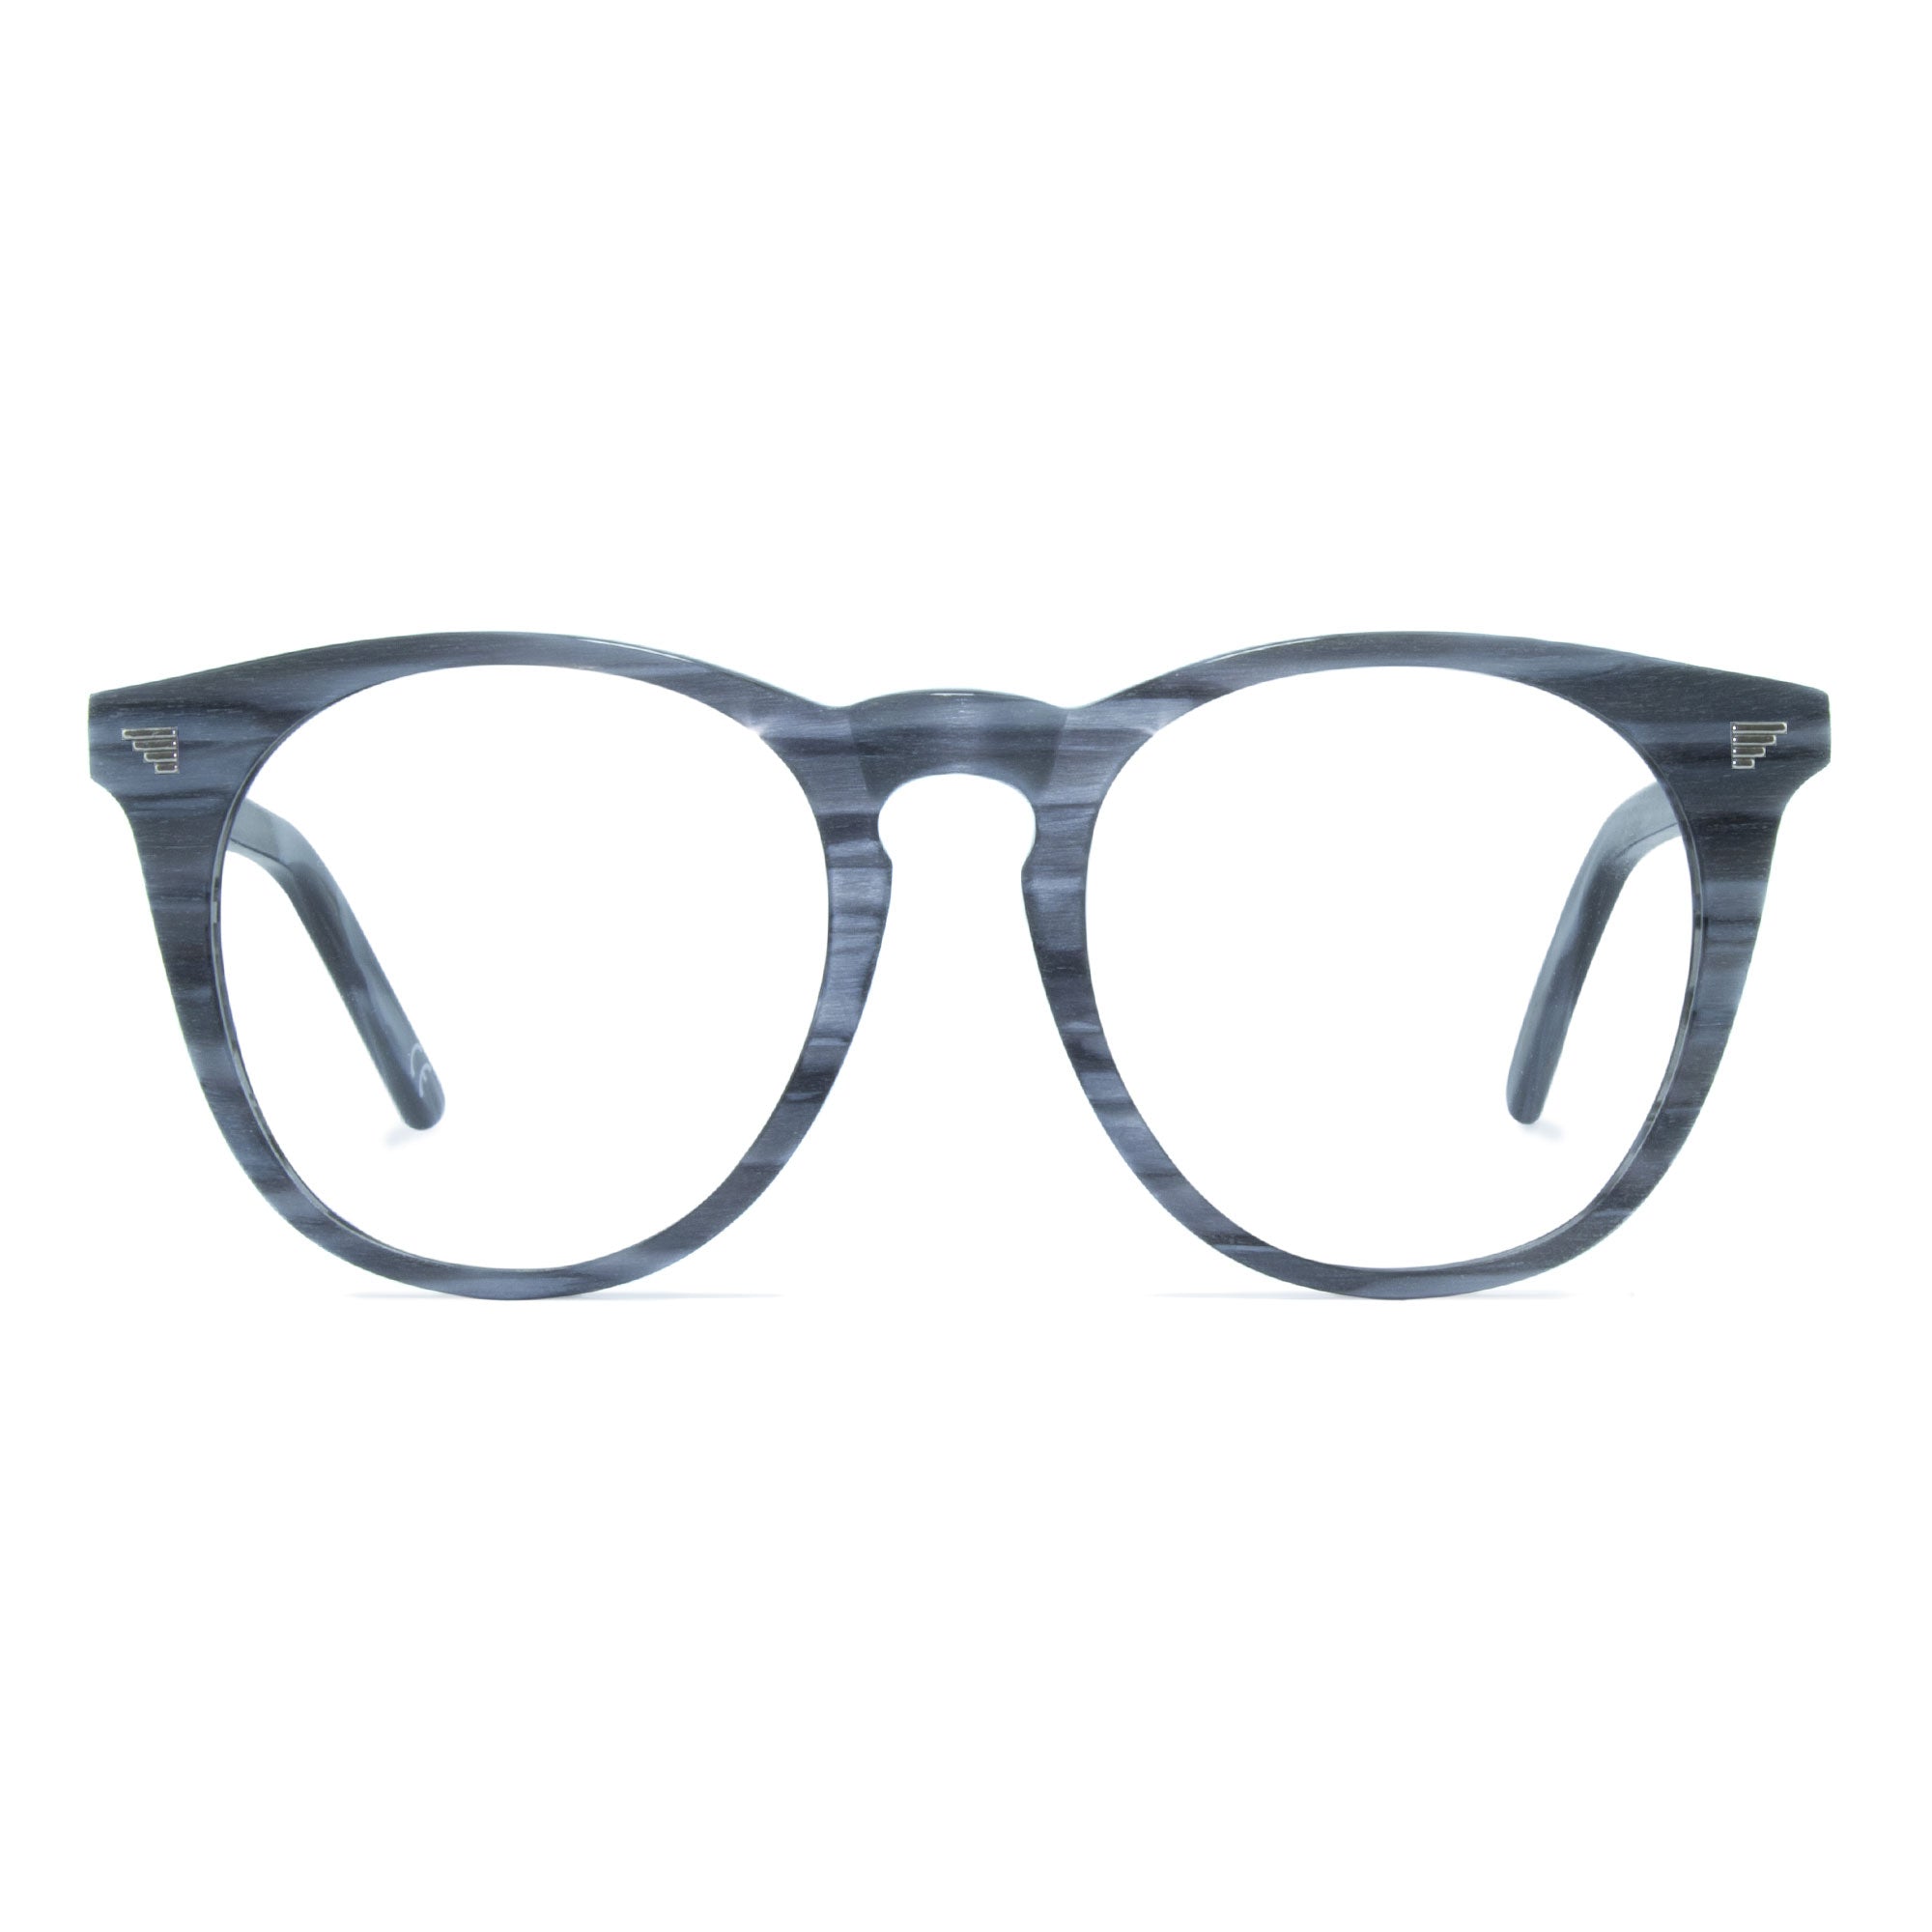 light grey large round glasses frame